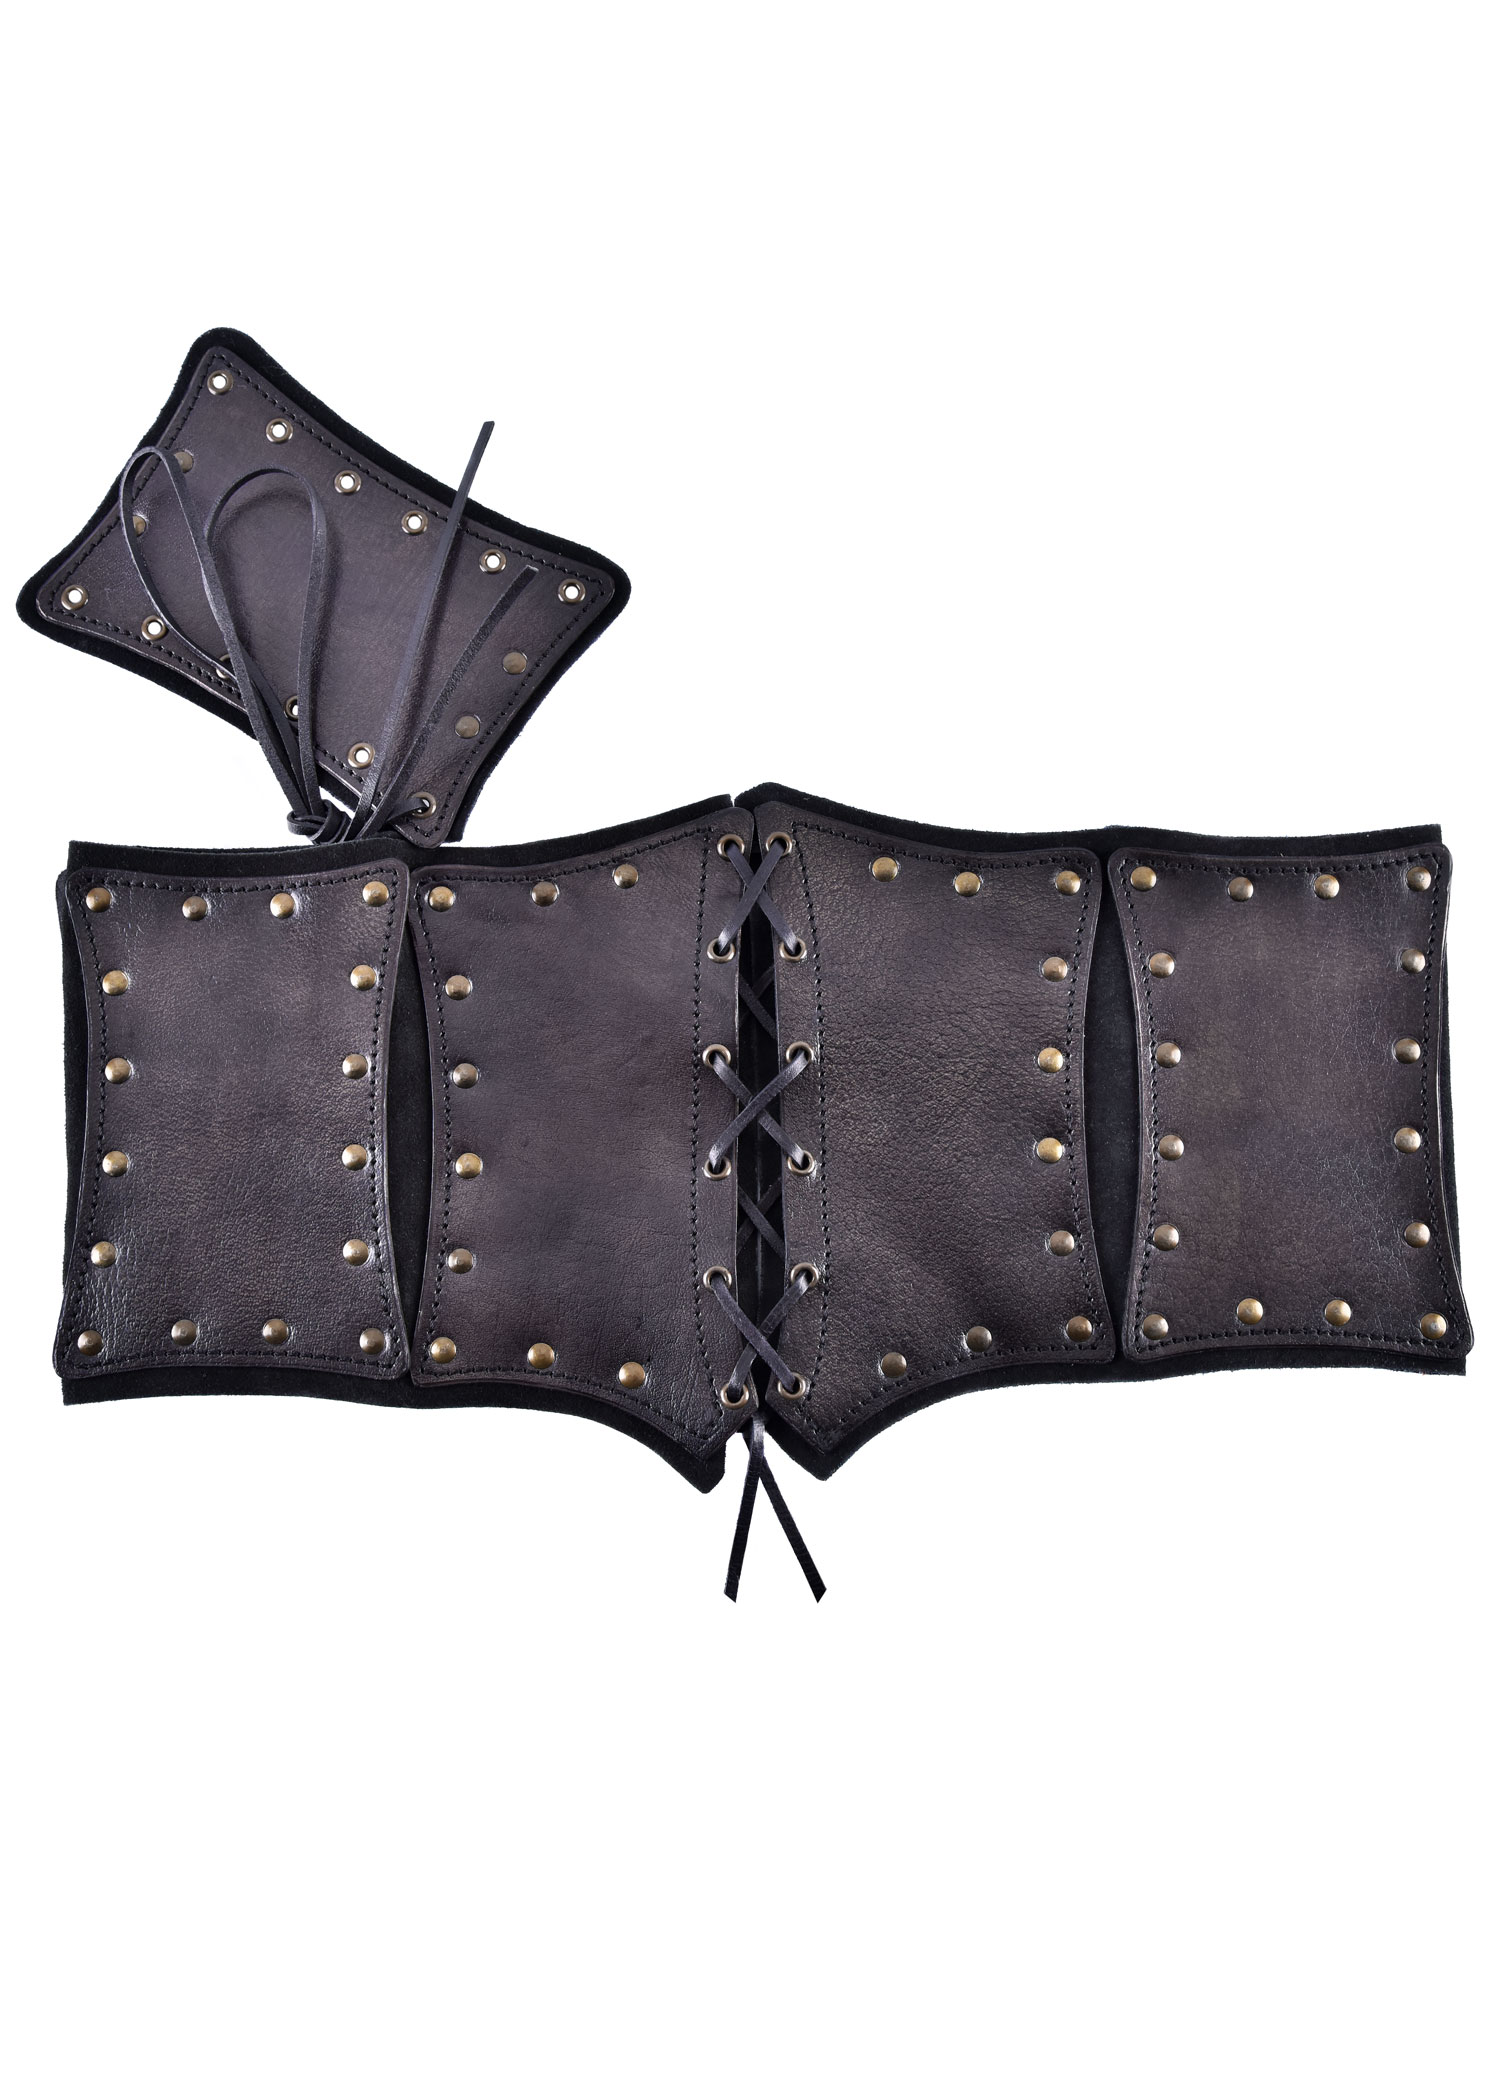 A metallic bronze leather circle skirt a grey herring bone corset